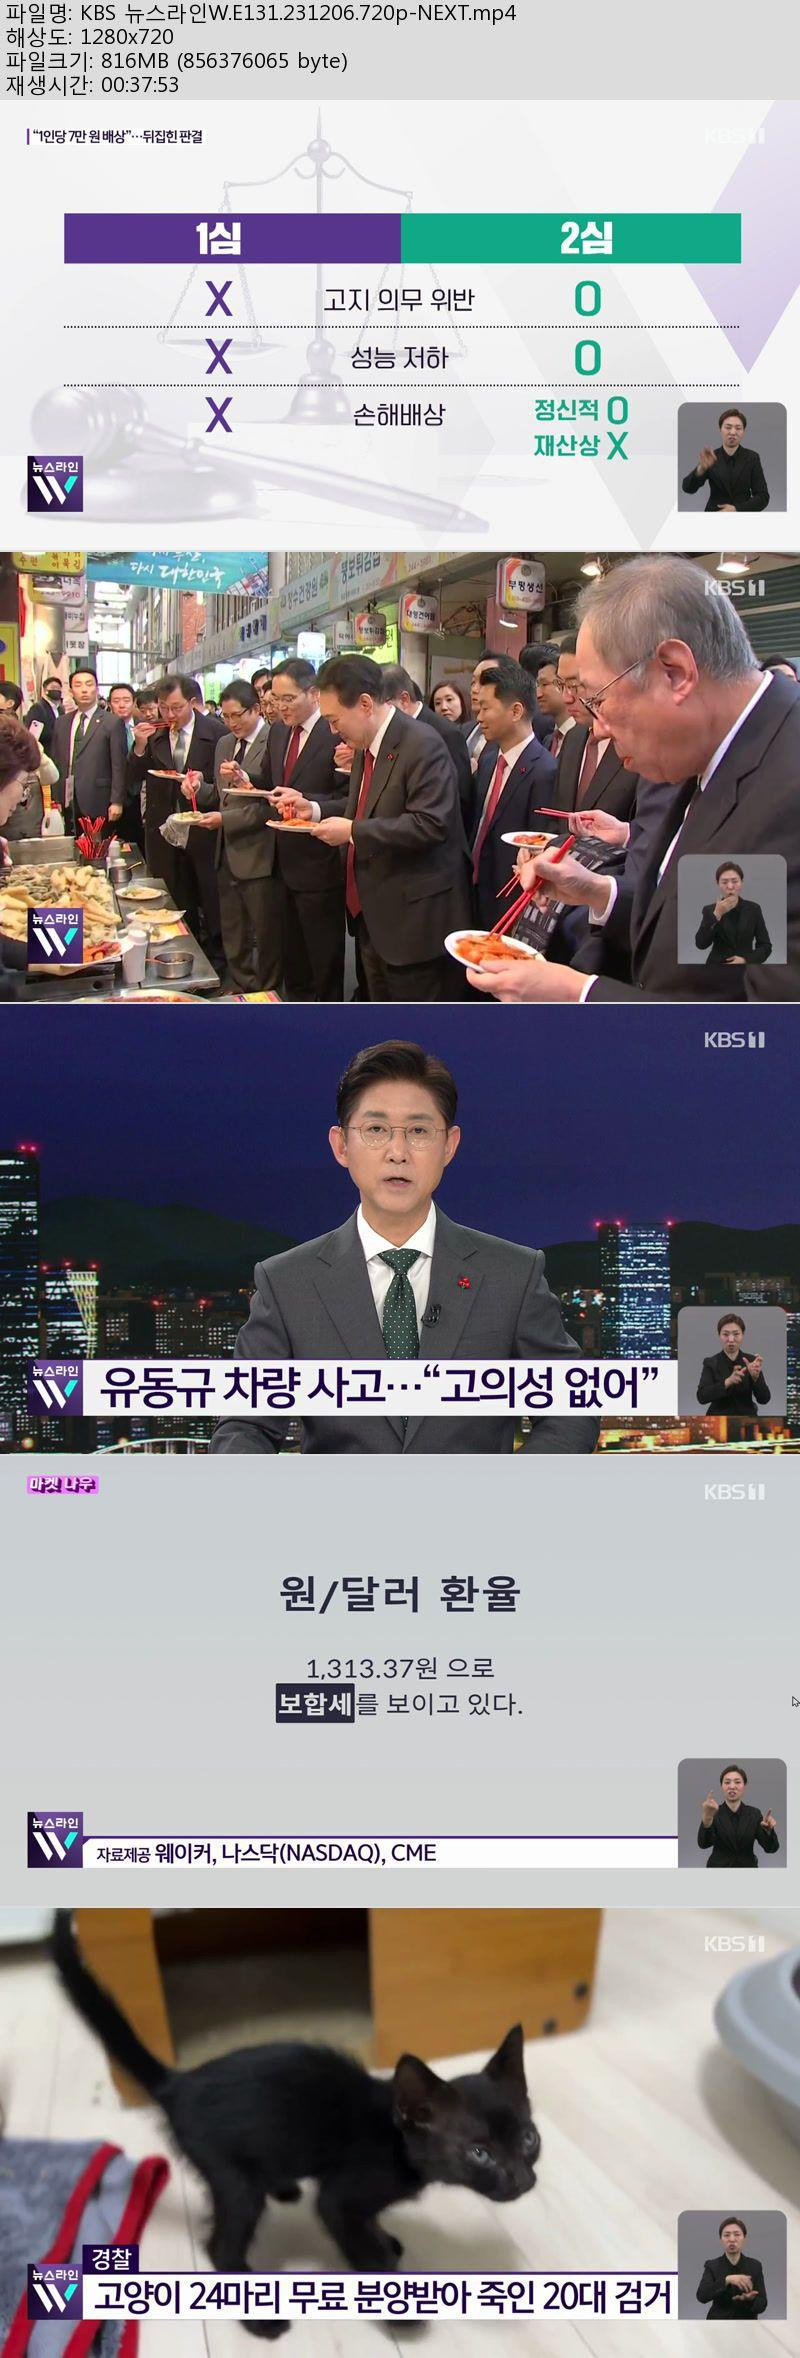 KBS 뉴스라인W.E131.231206.720p-NEXT